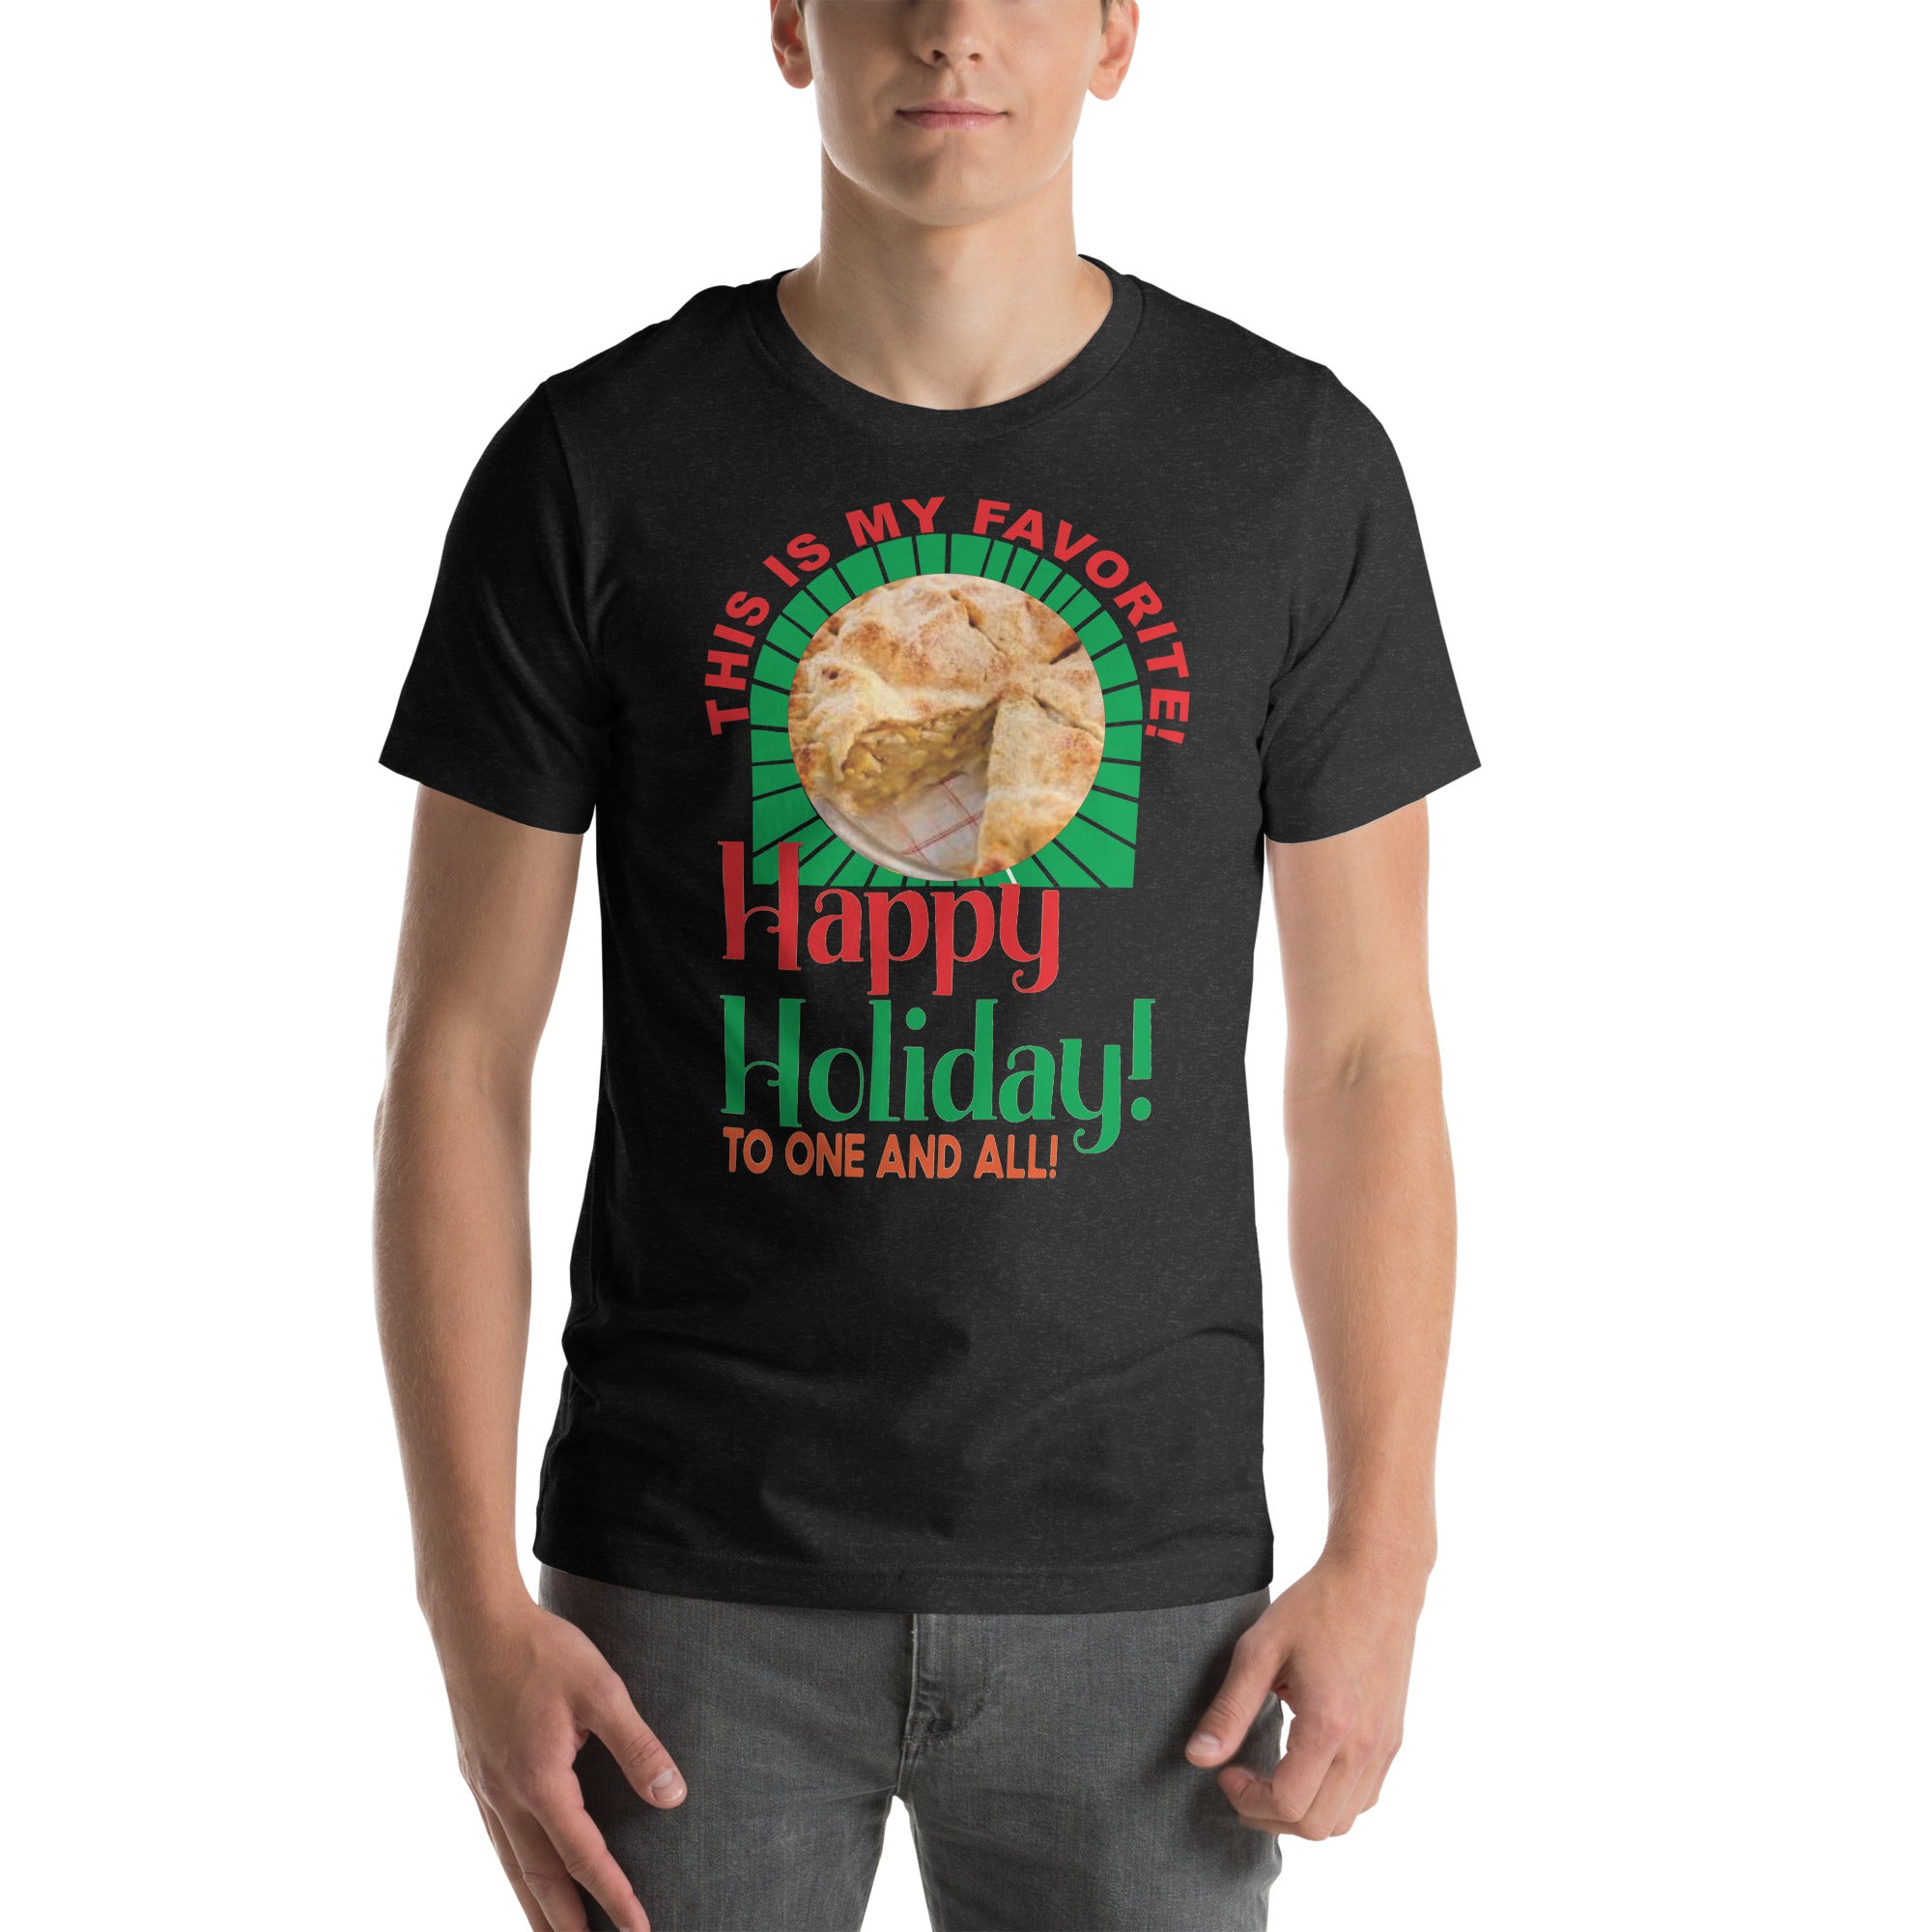 Happy Holiday t-shirt